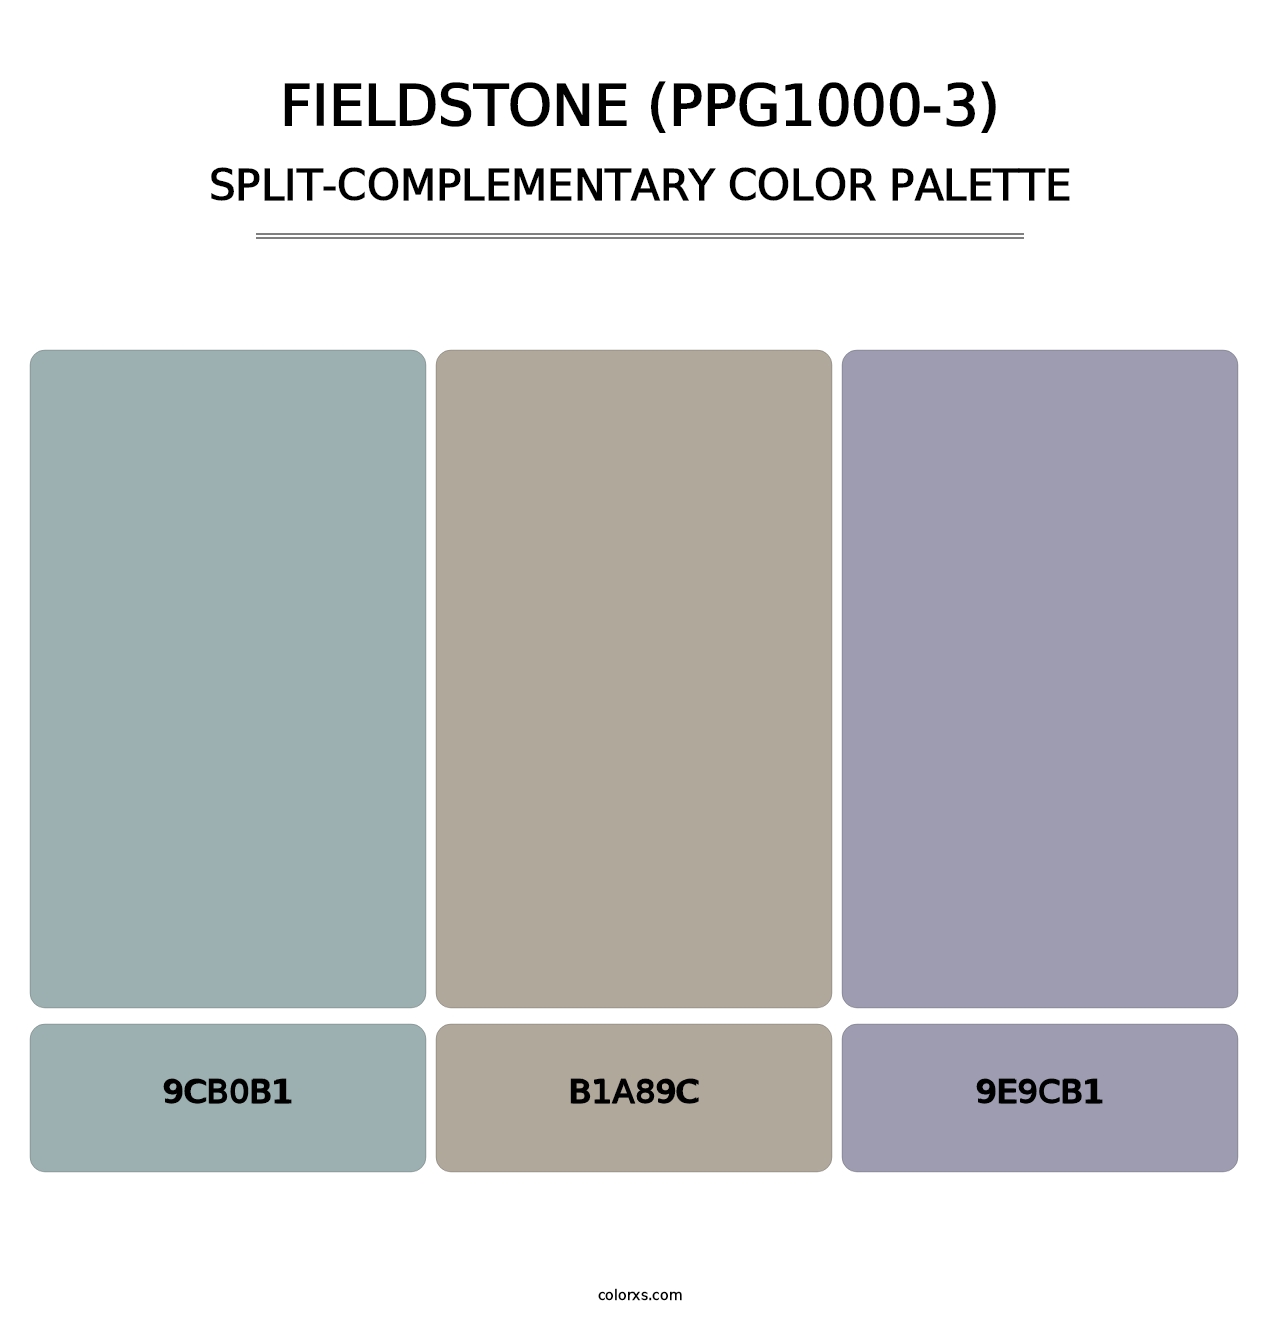 Fieldstone (PPG1000-3) - Split-Complementary Color Palette